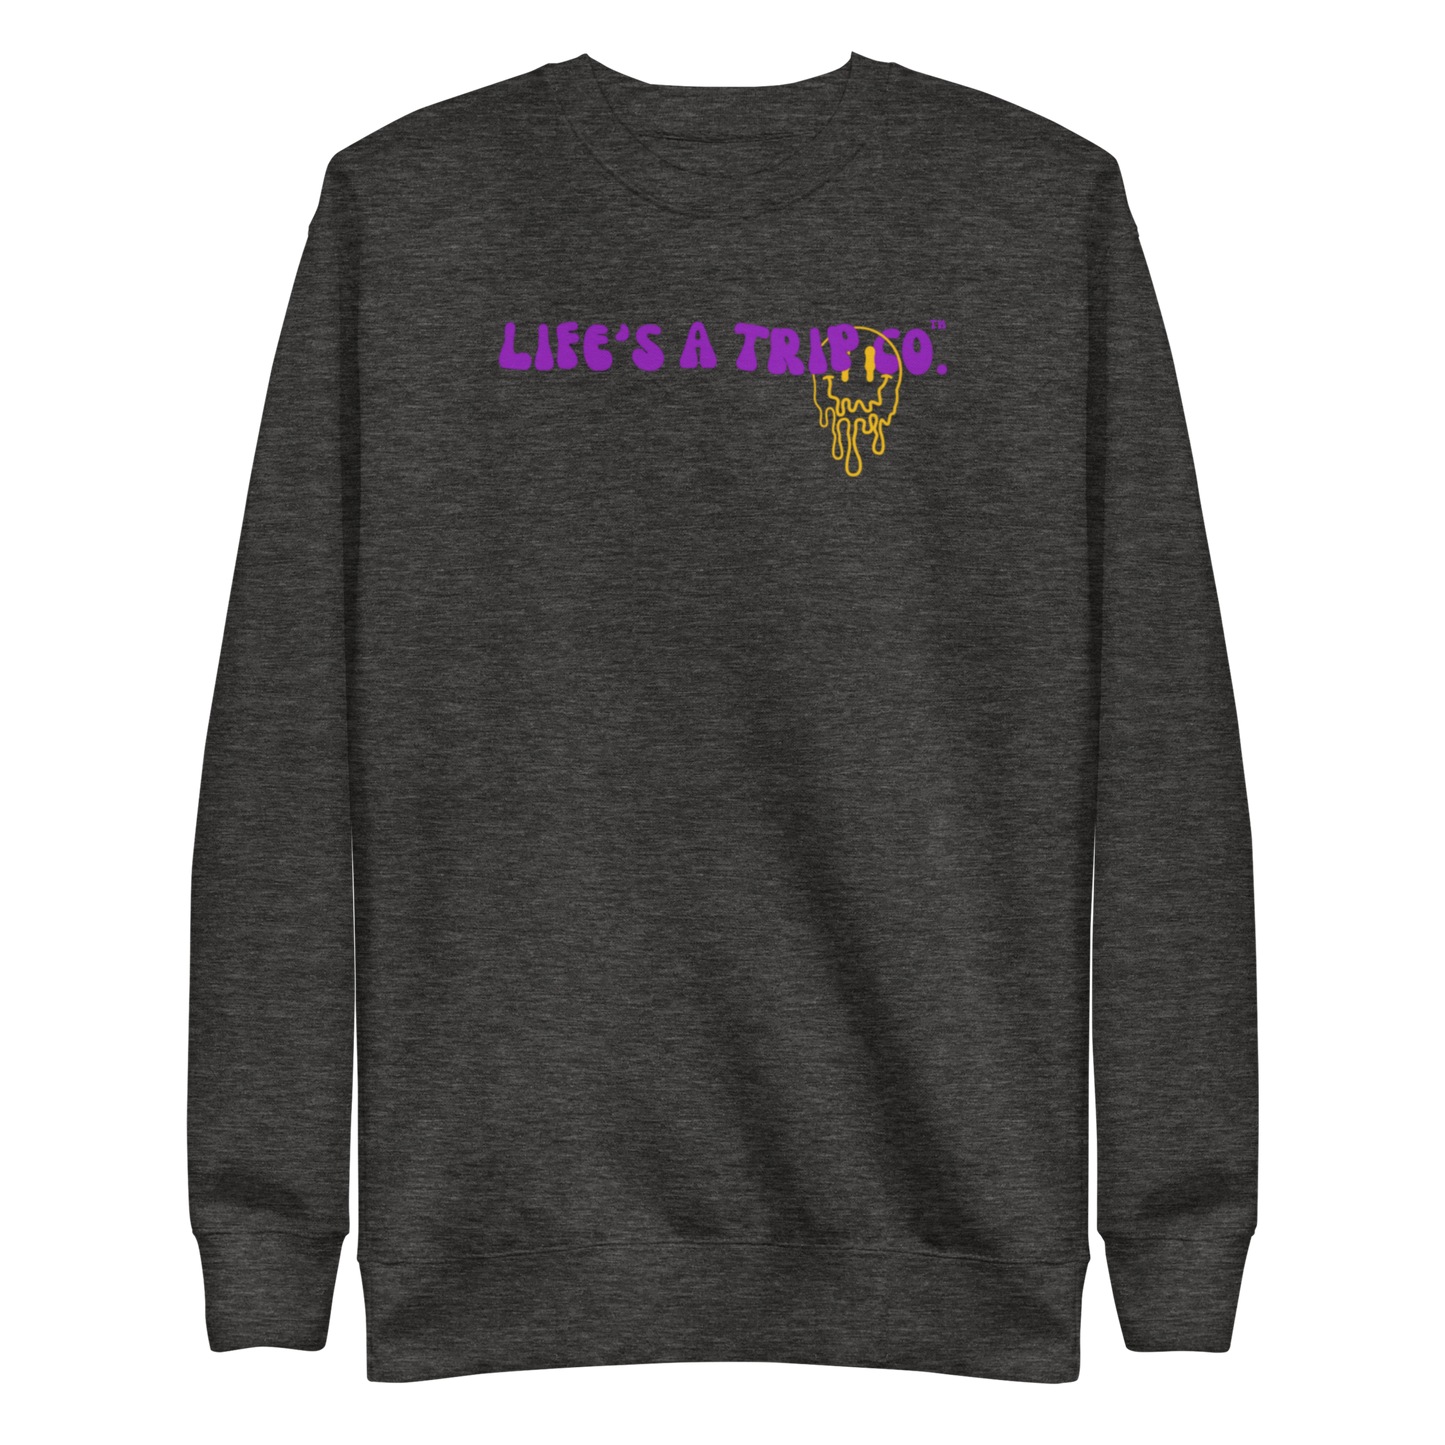 Life's a Trip Co.™ Stay Weird Premium Sweatshirt | Cotton Heritage M2480